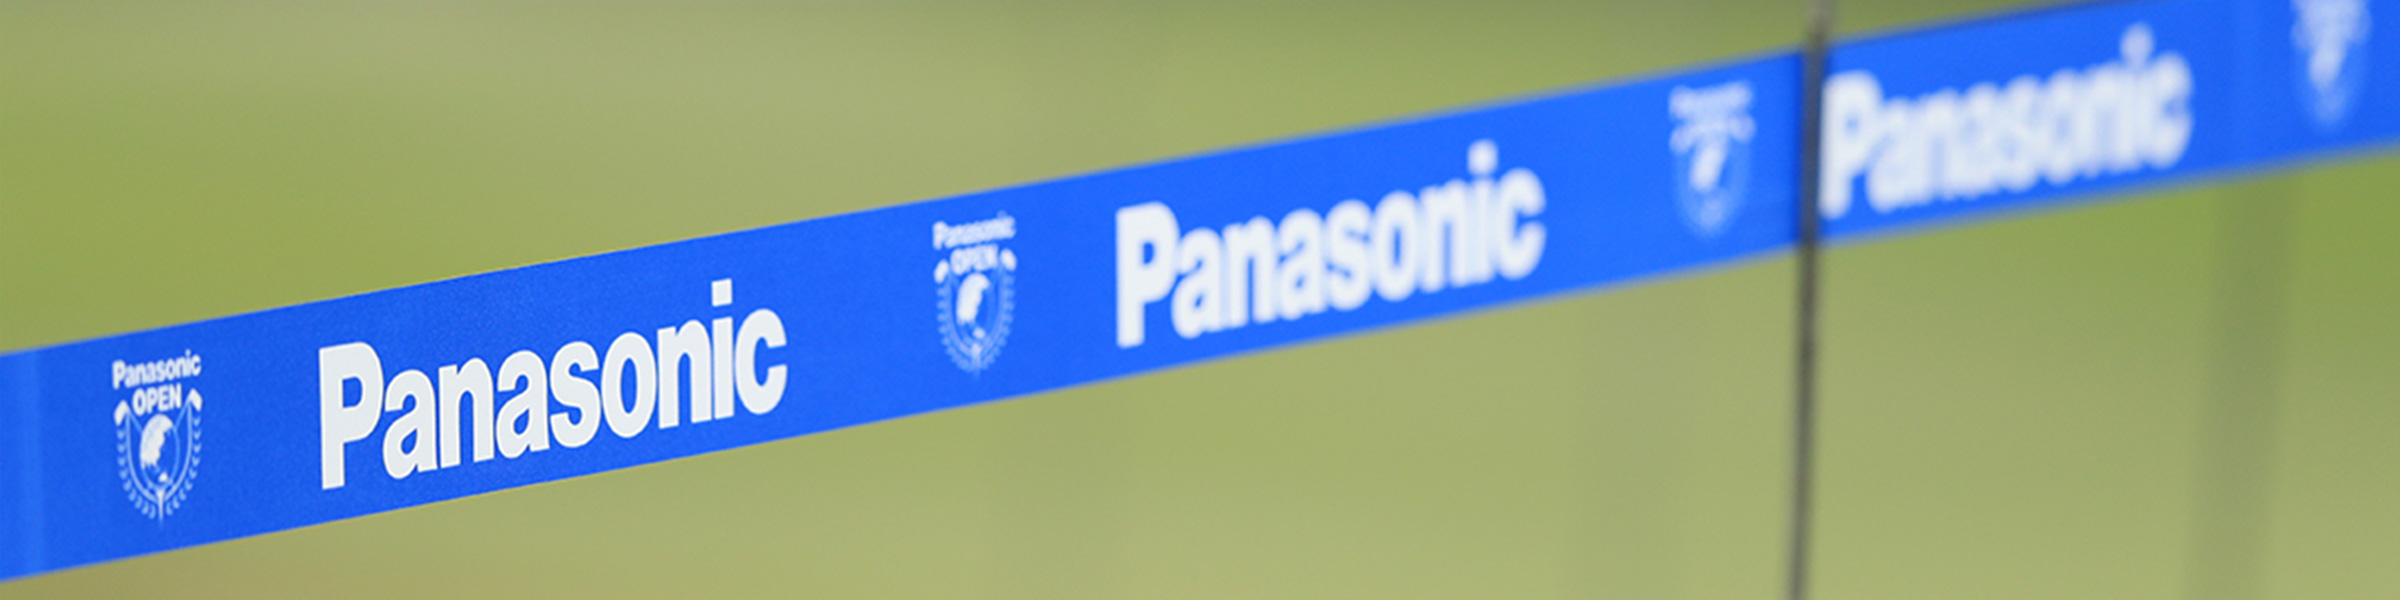 Panasonic OPEN GOLF CHAMPIONSHIP